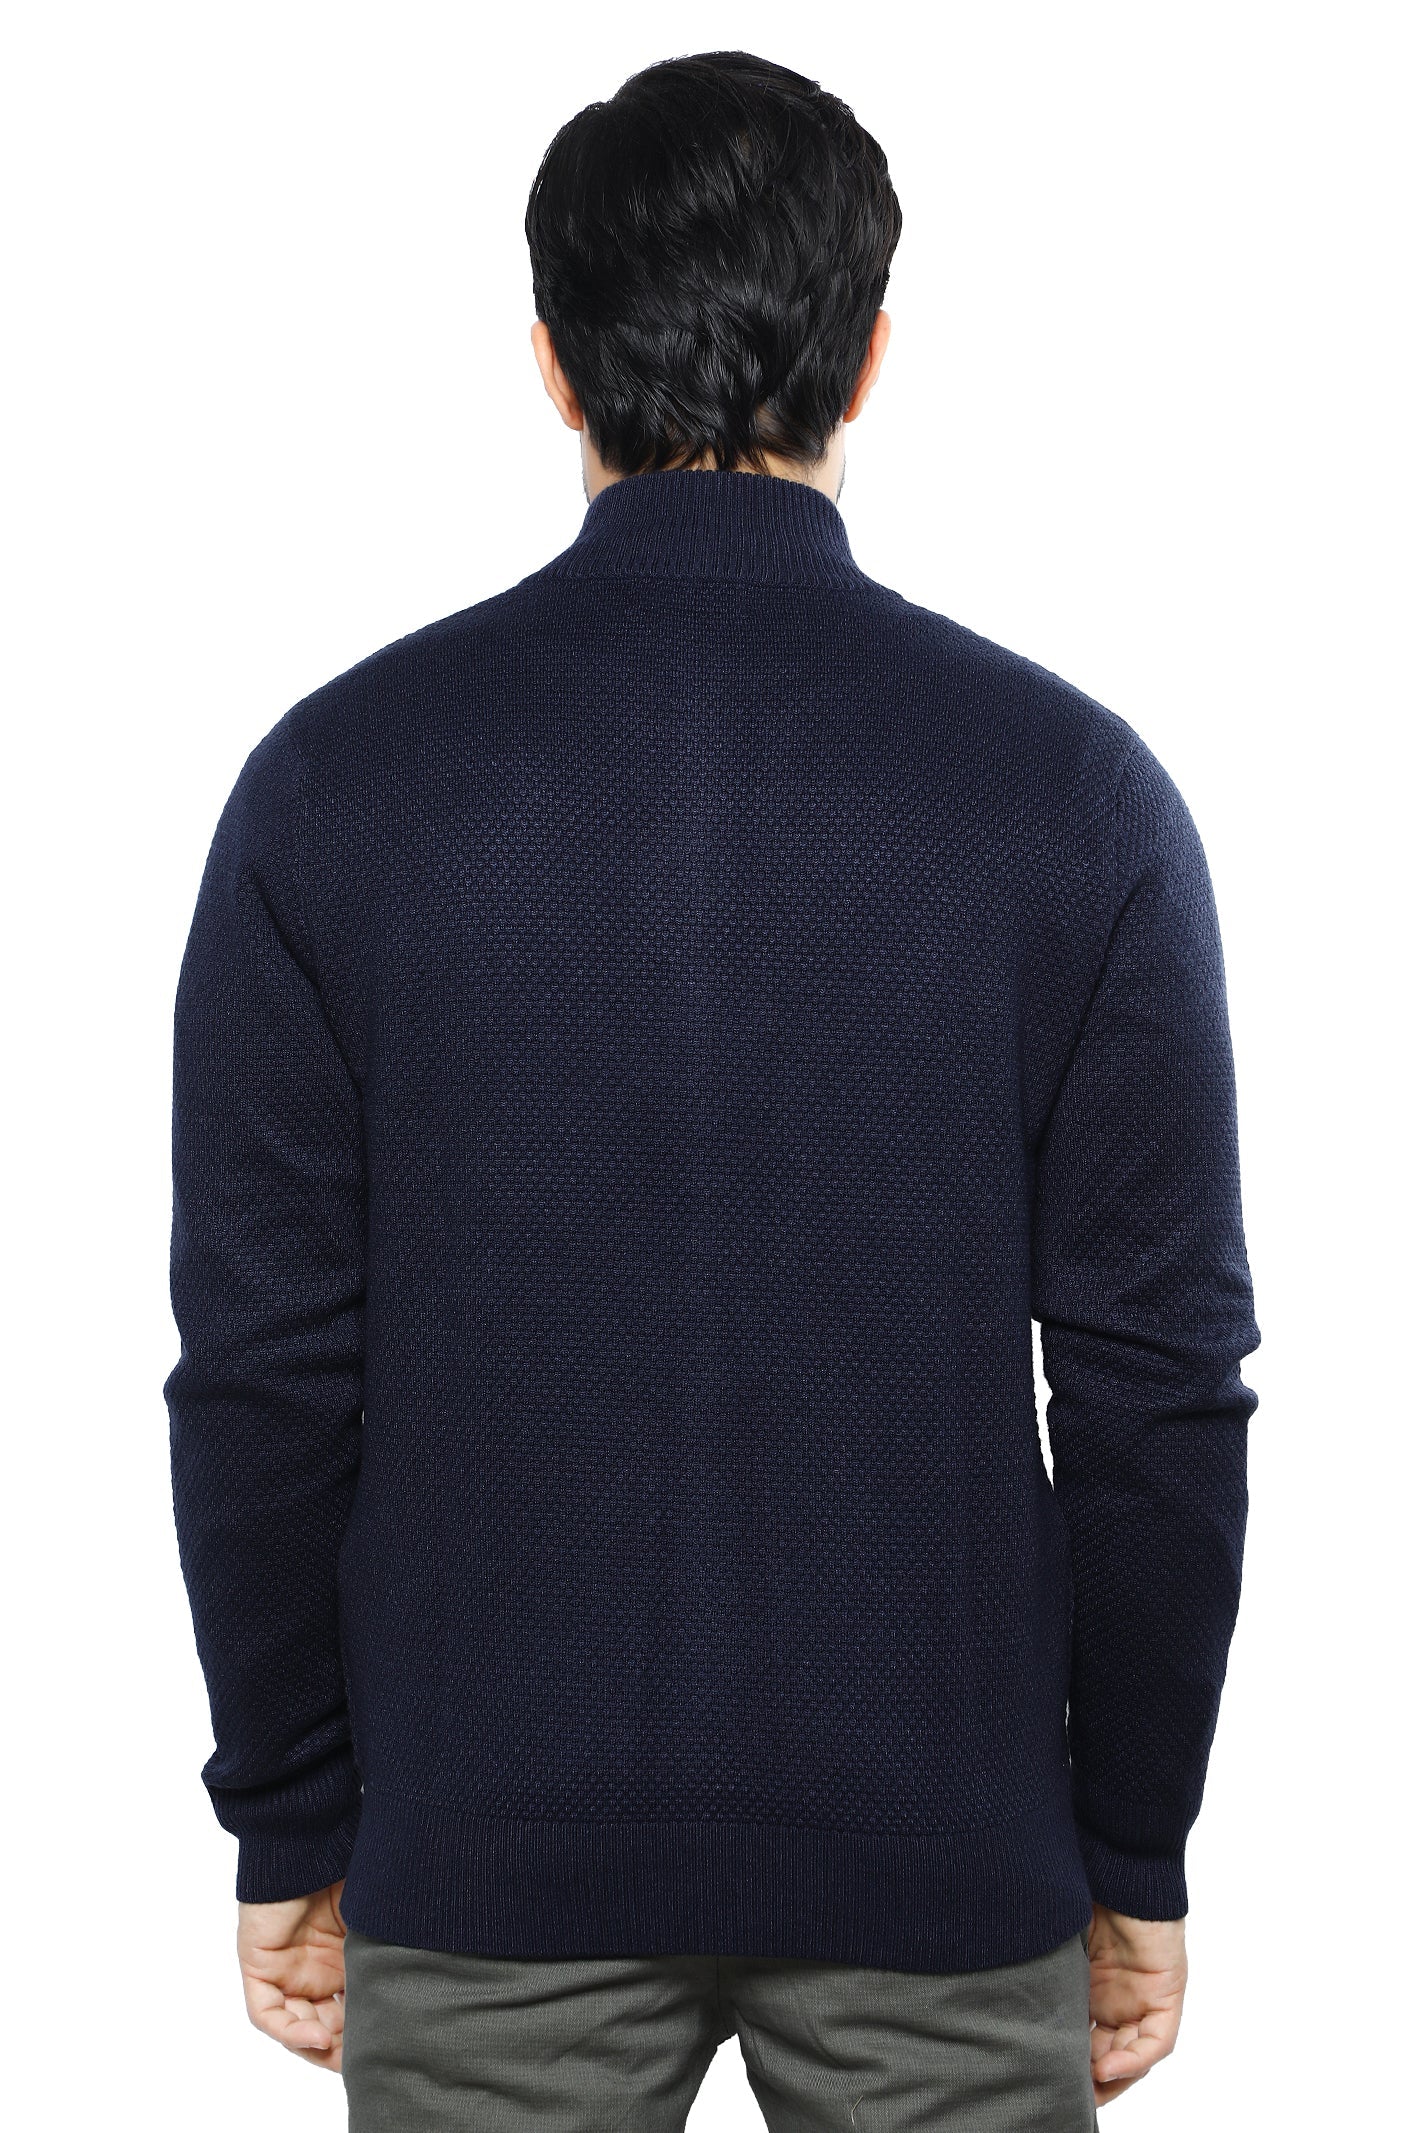 Gents Sweater SKU: SA587-D-BLUE - Diners